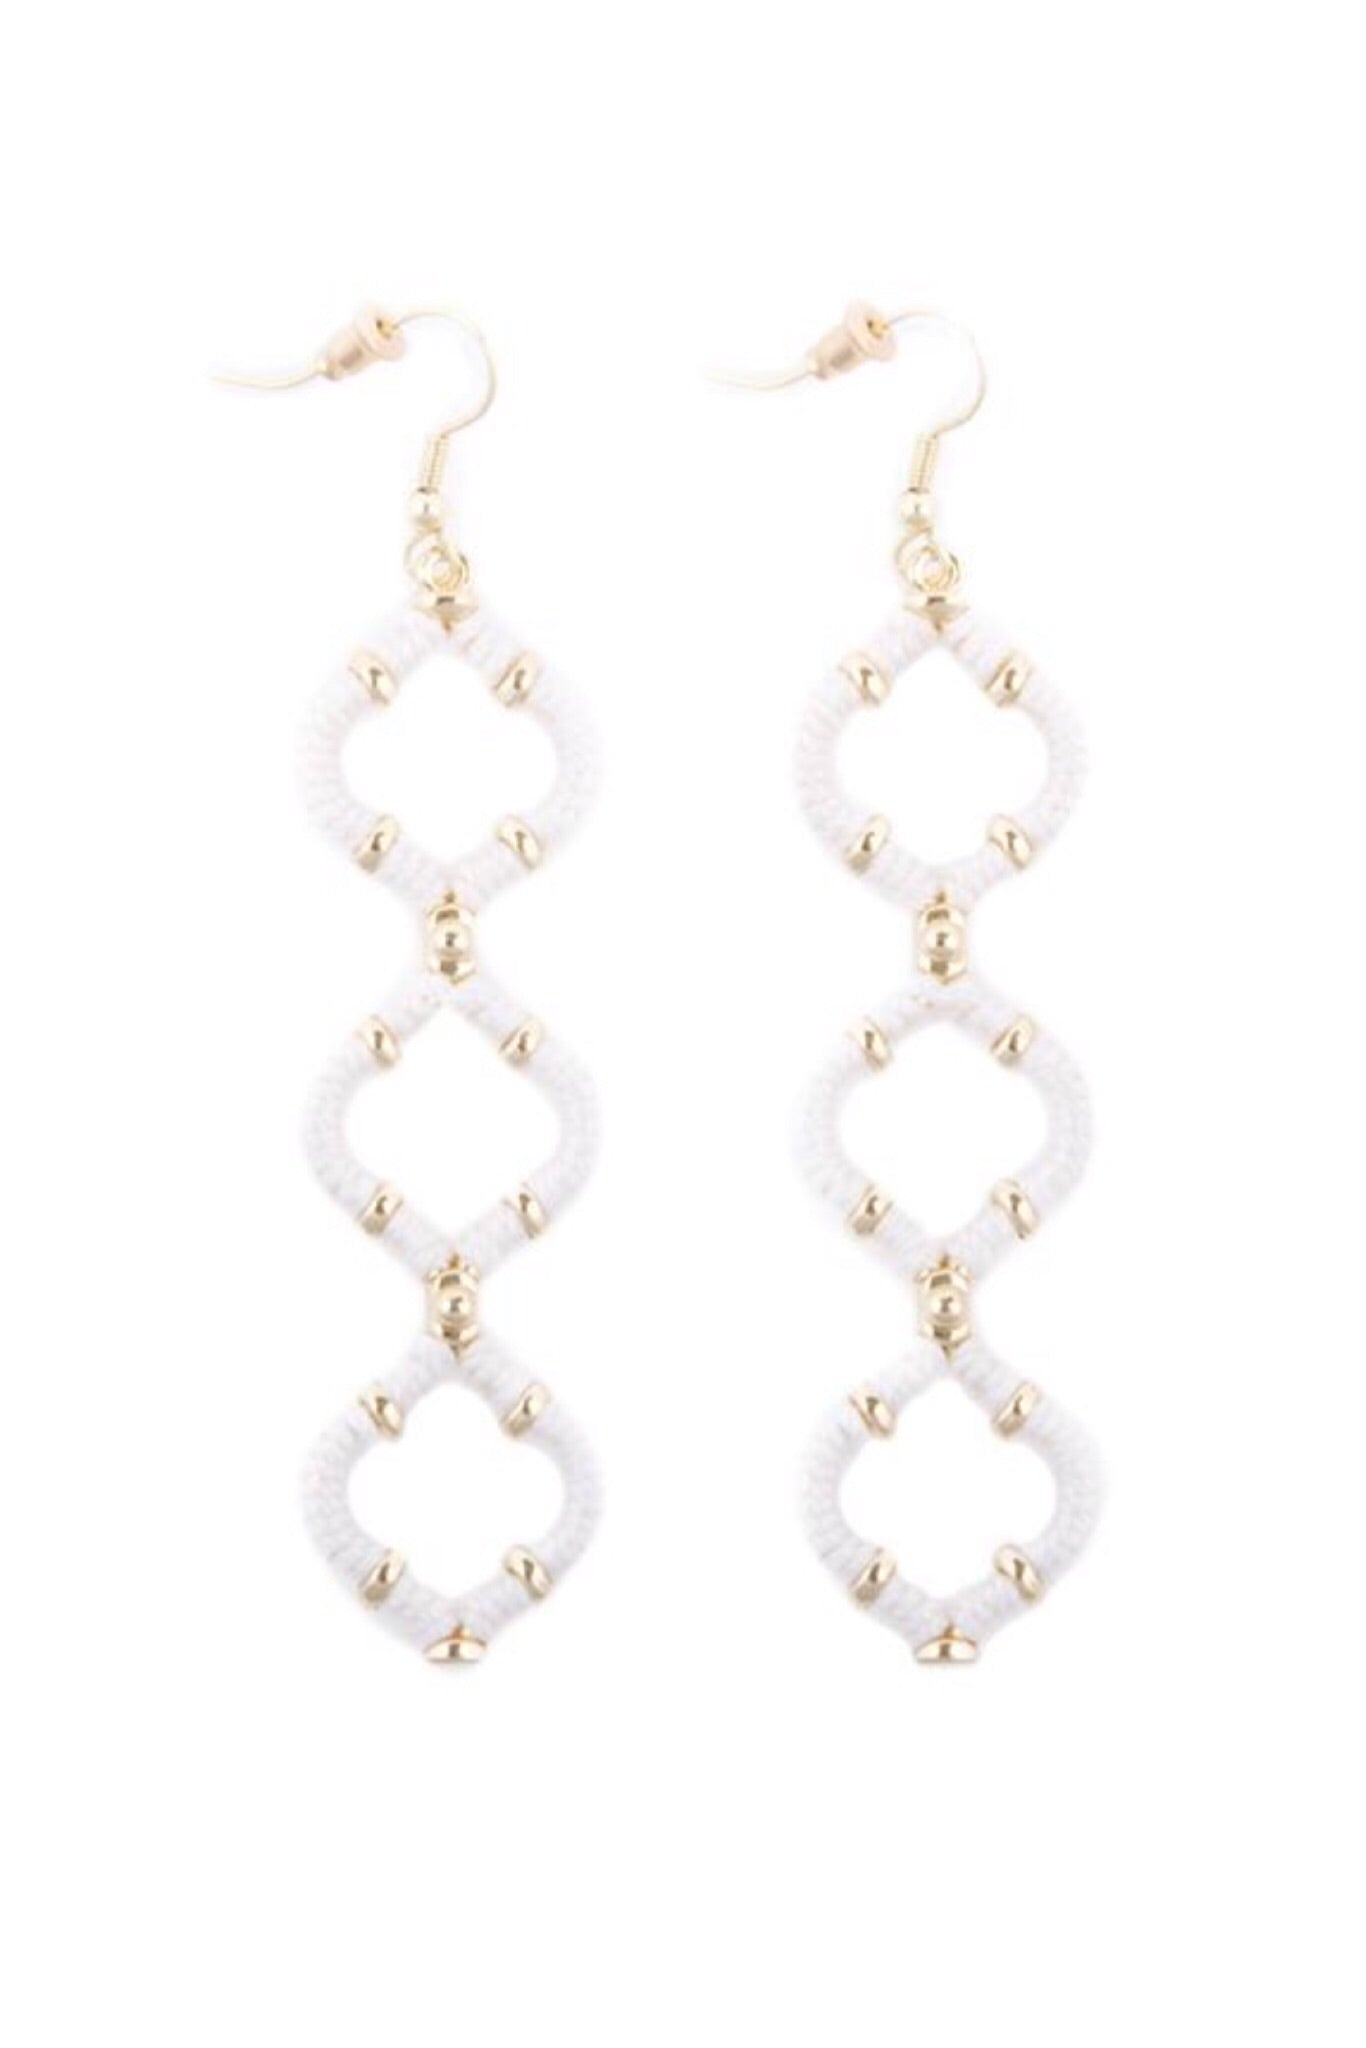 MSC ~ Wrapped Quatrefoil Necklace & Earrings